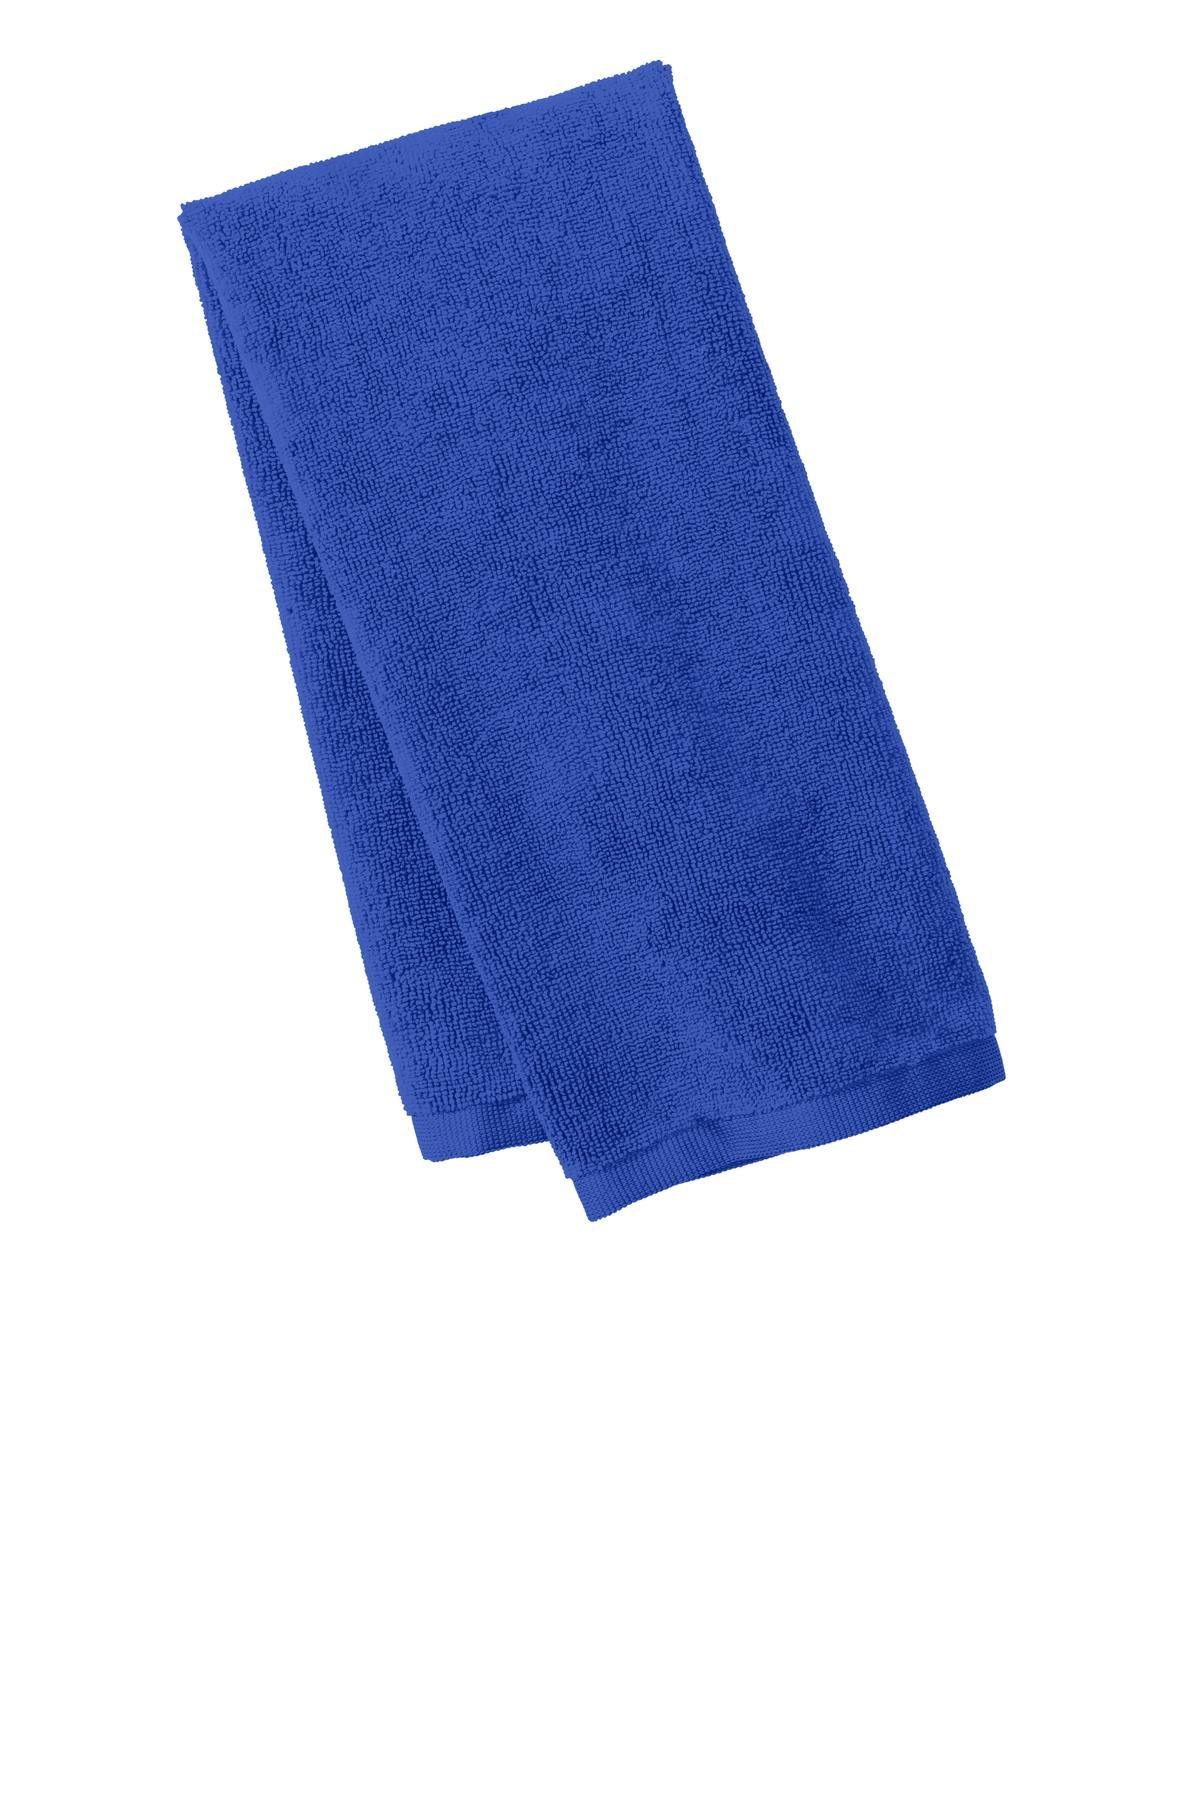 Port Authority Microfiber Golf Towel. TW540 - Dresses Max